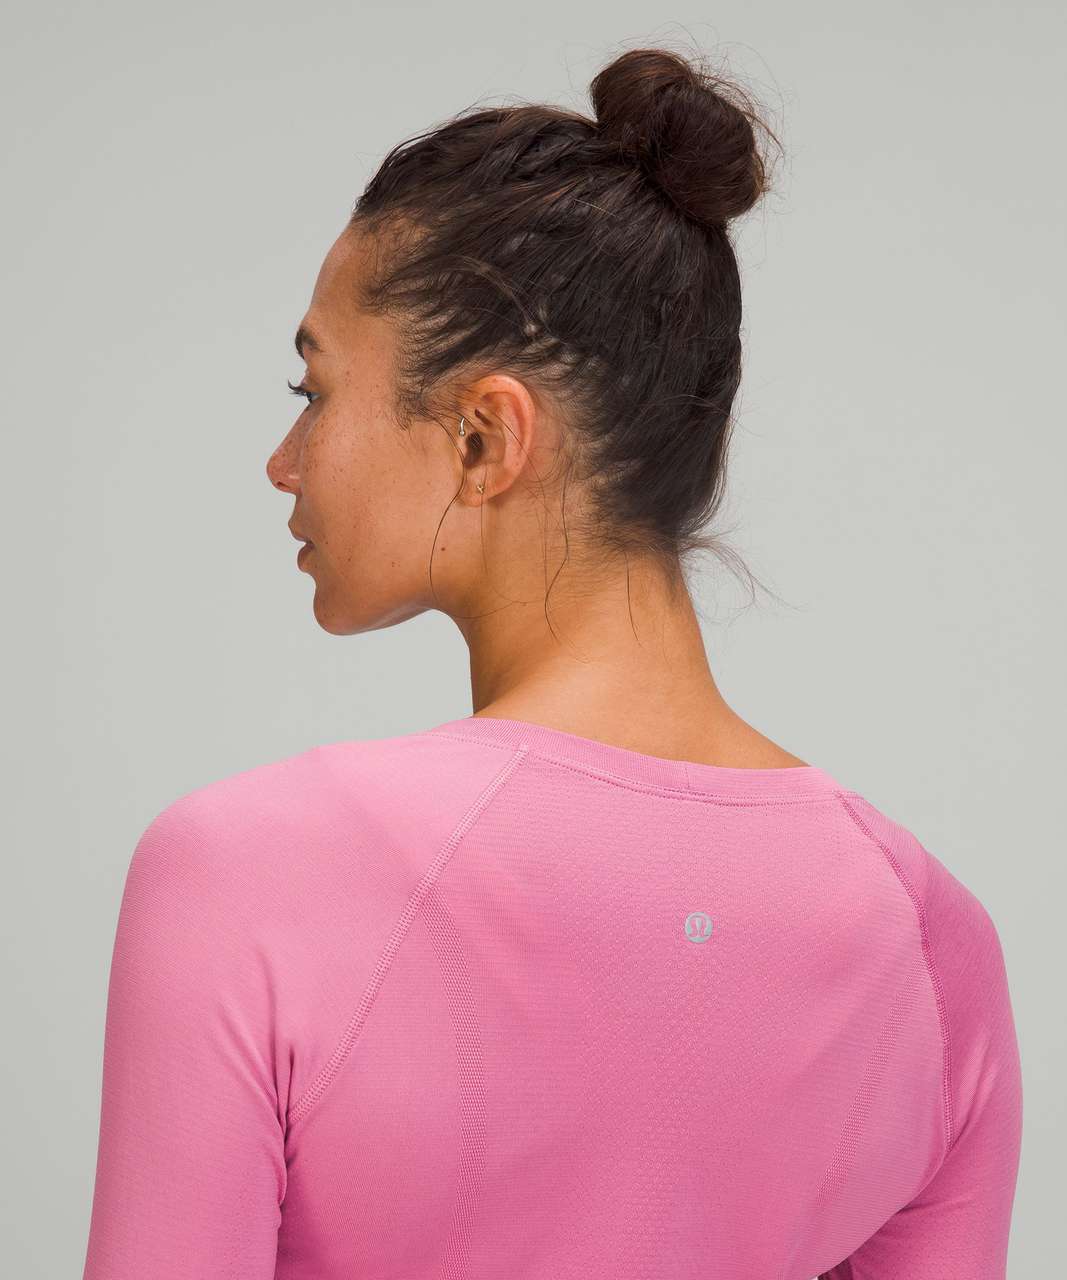 Lululemon Swiftly Tech Long Sleeve Shirt 2.0 - Pink Blossom / Pink Blossom